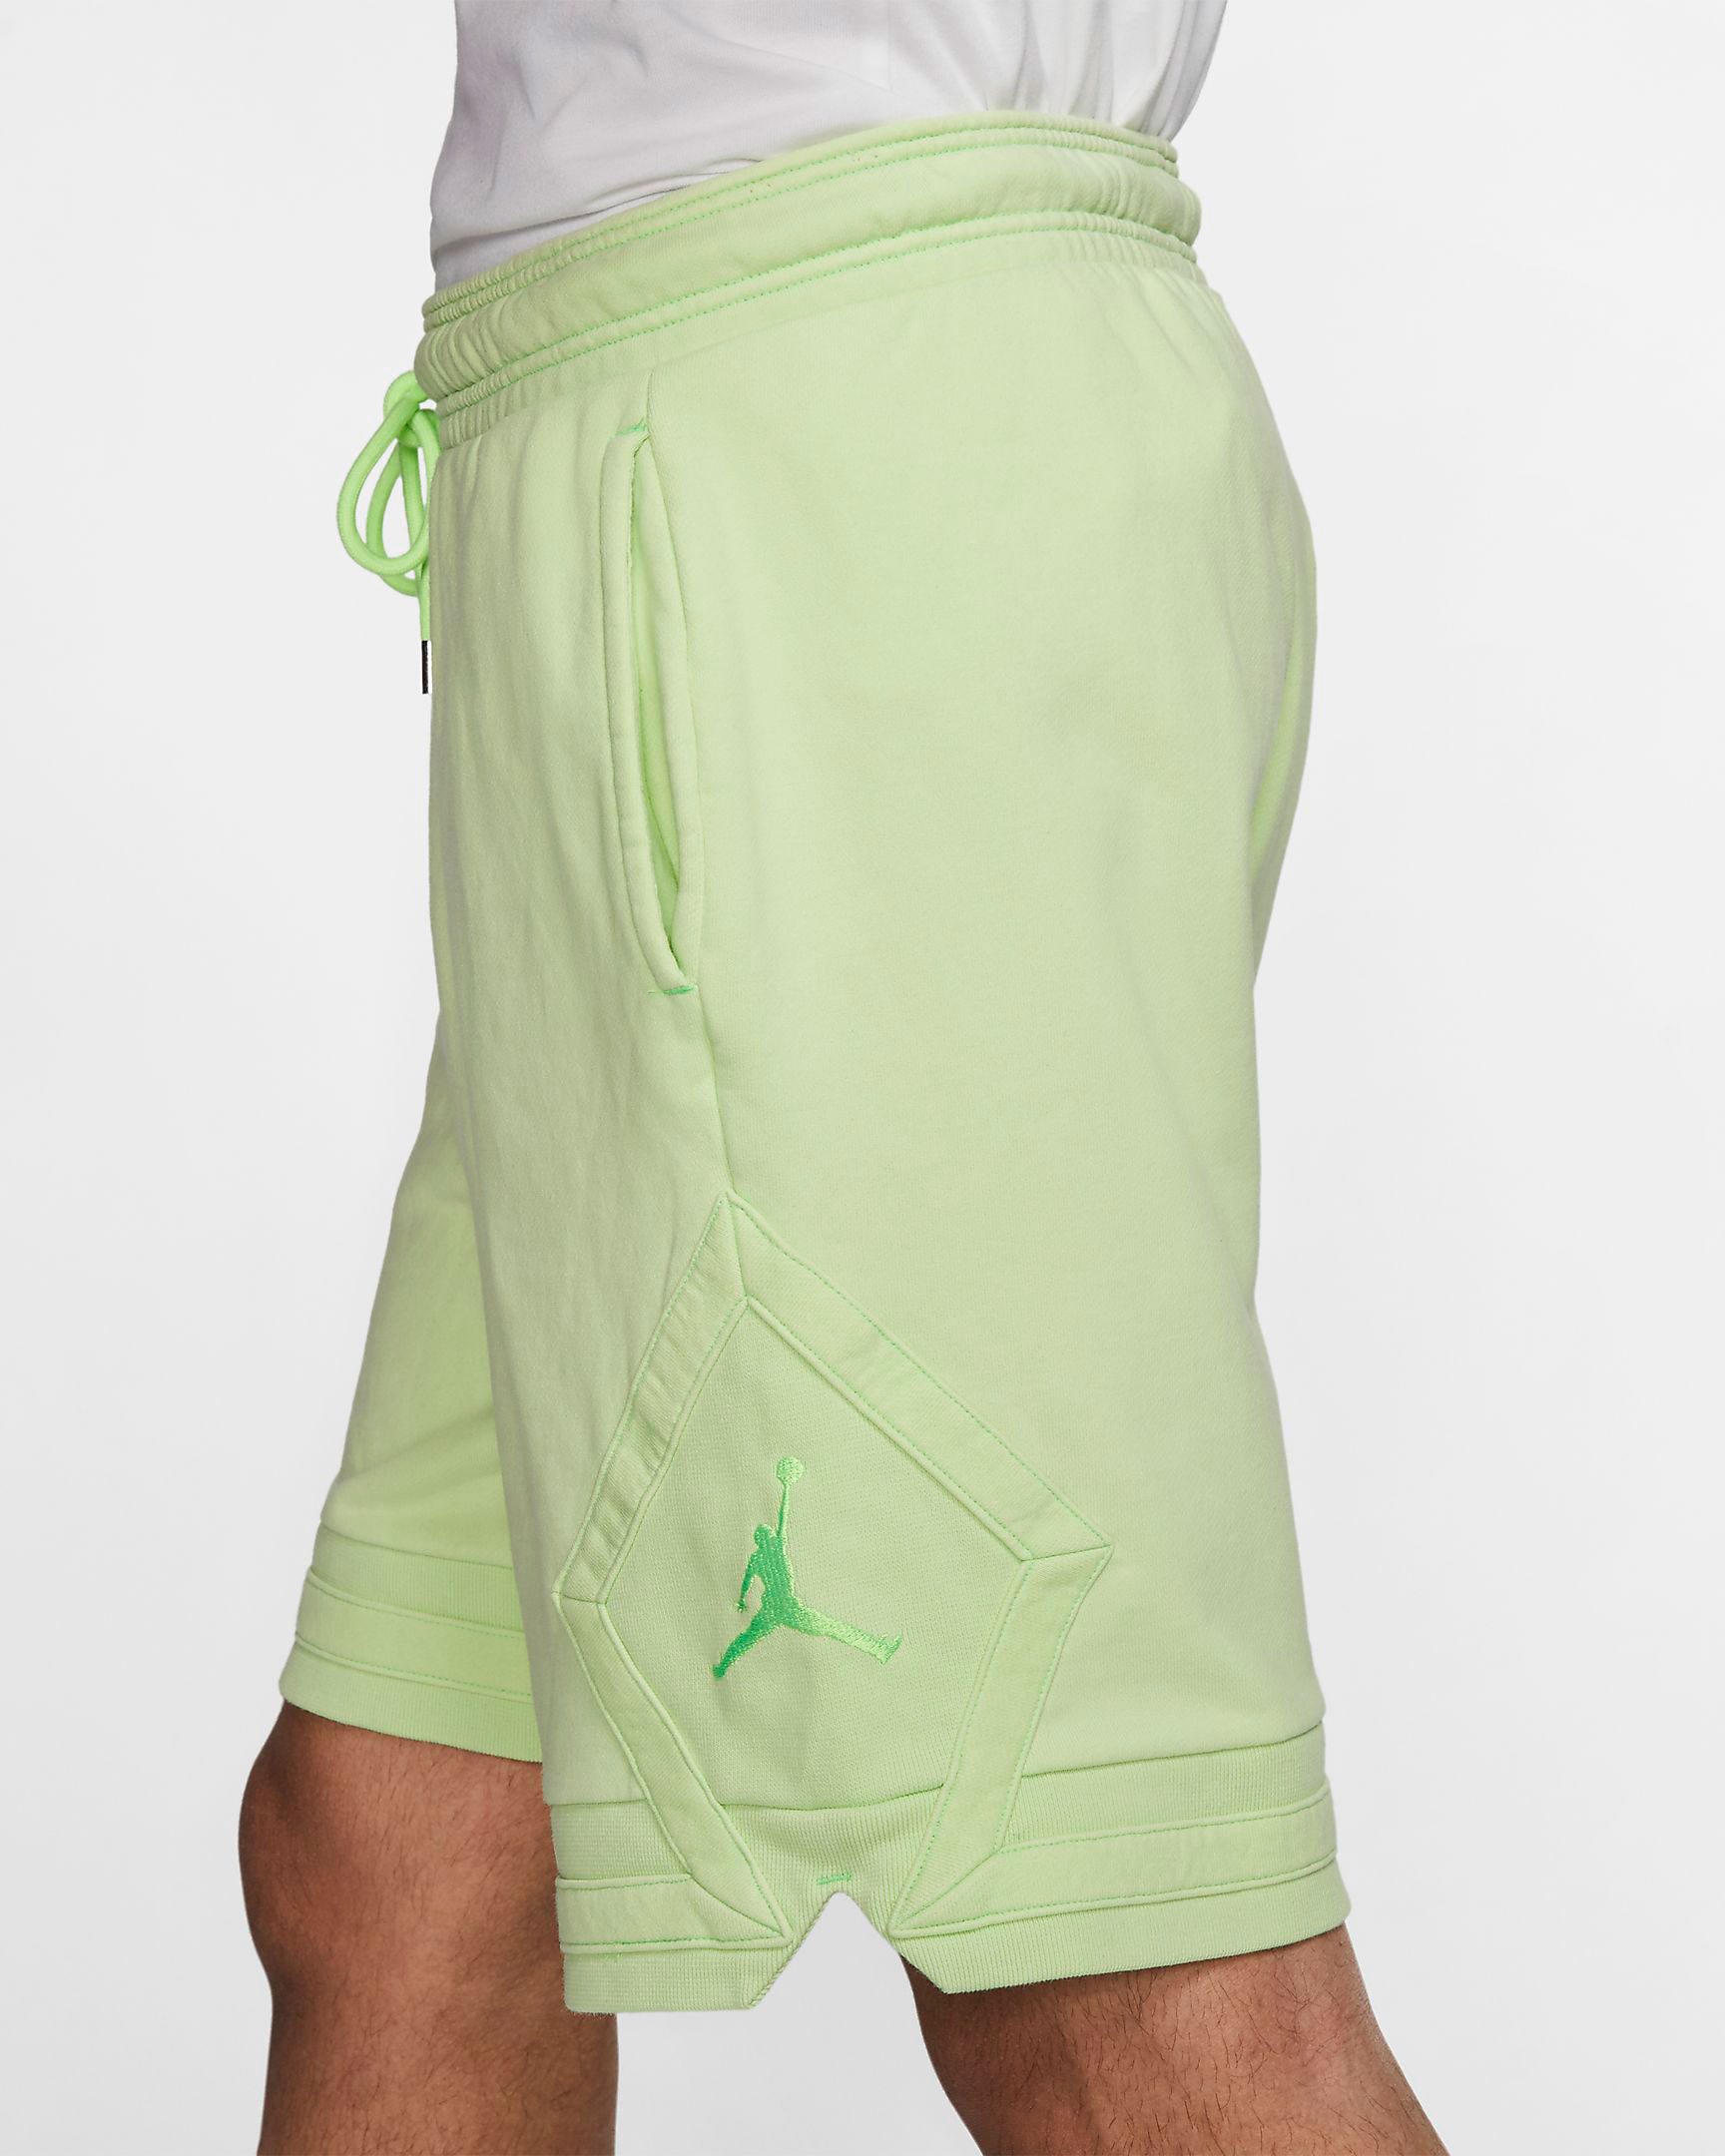 jordan-ghost-green-shorts-2